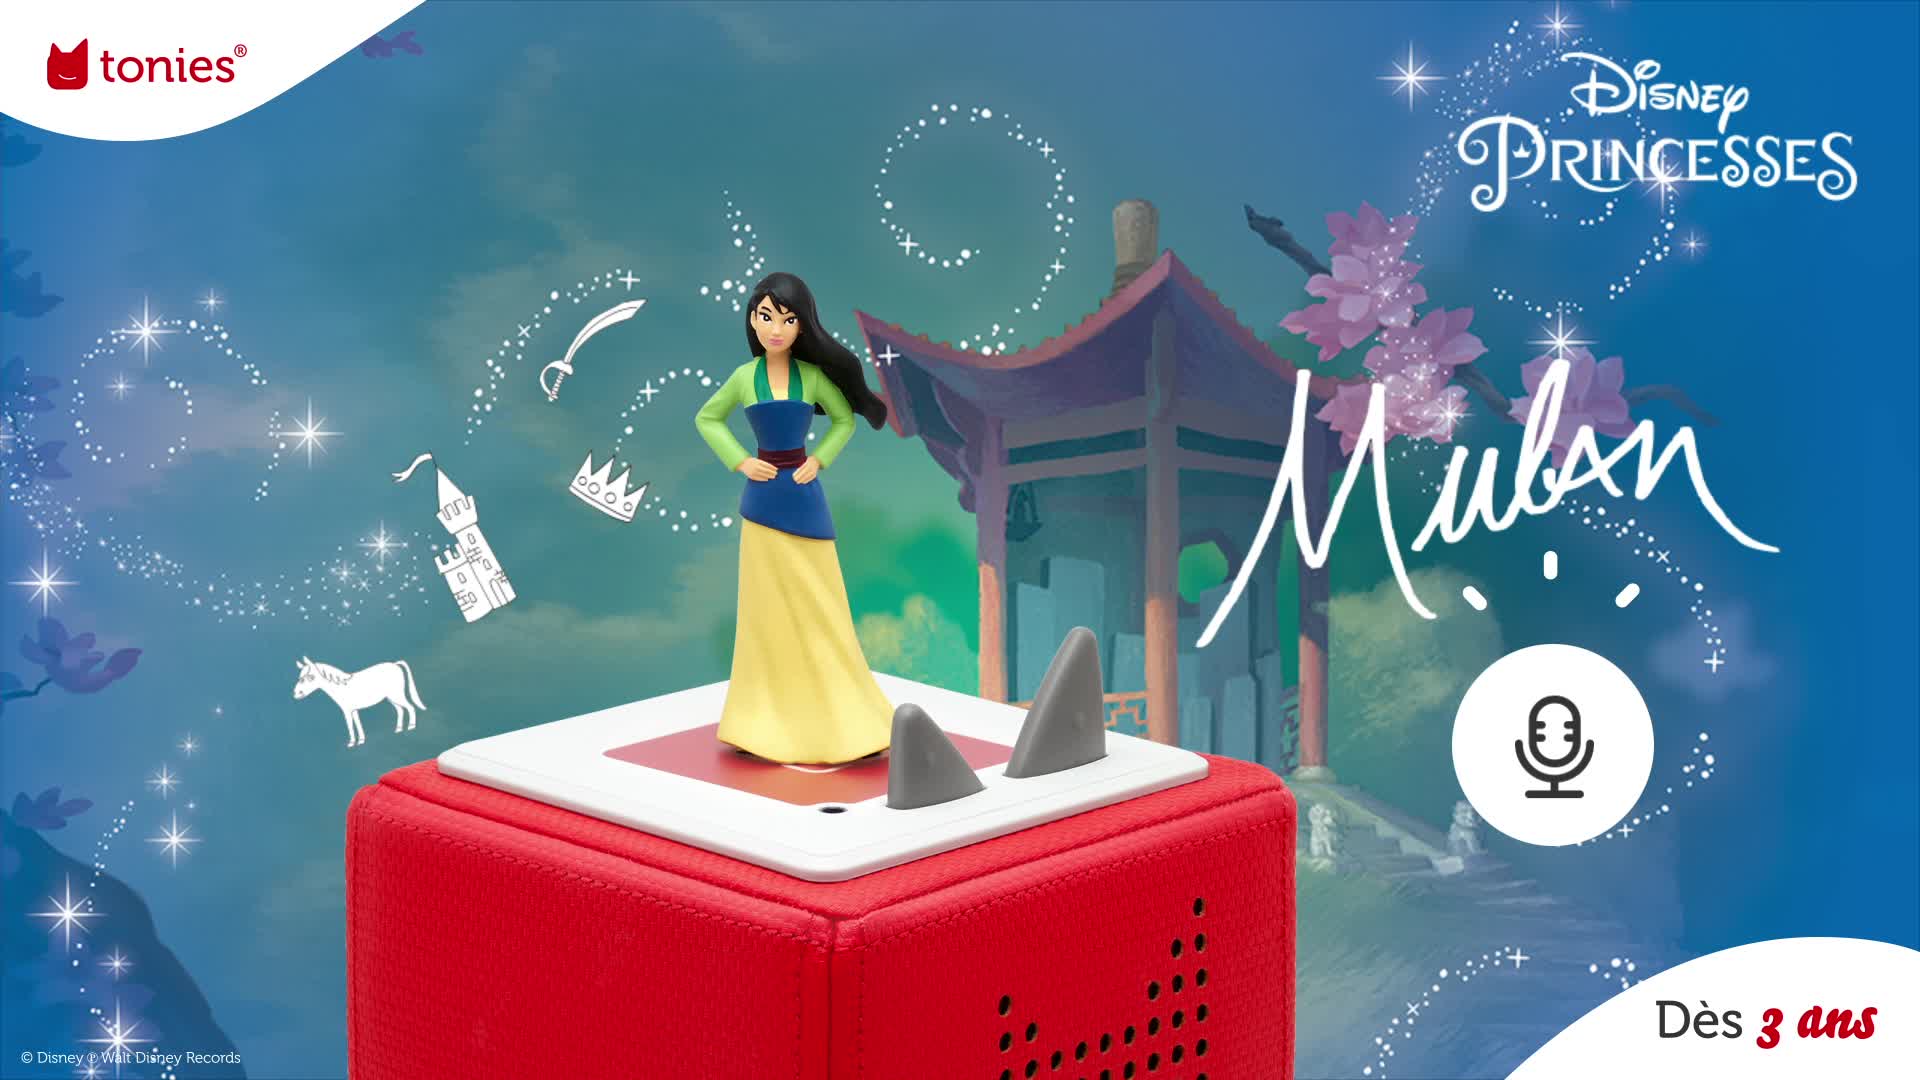 Tonies - Mulan (Disney Princesses) Boxine France : King Jouet